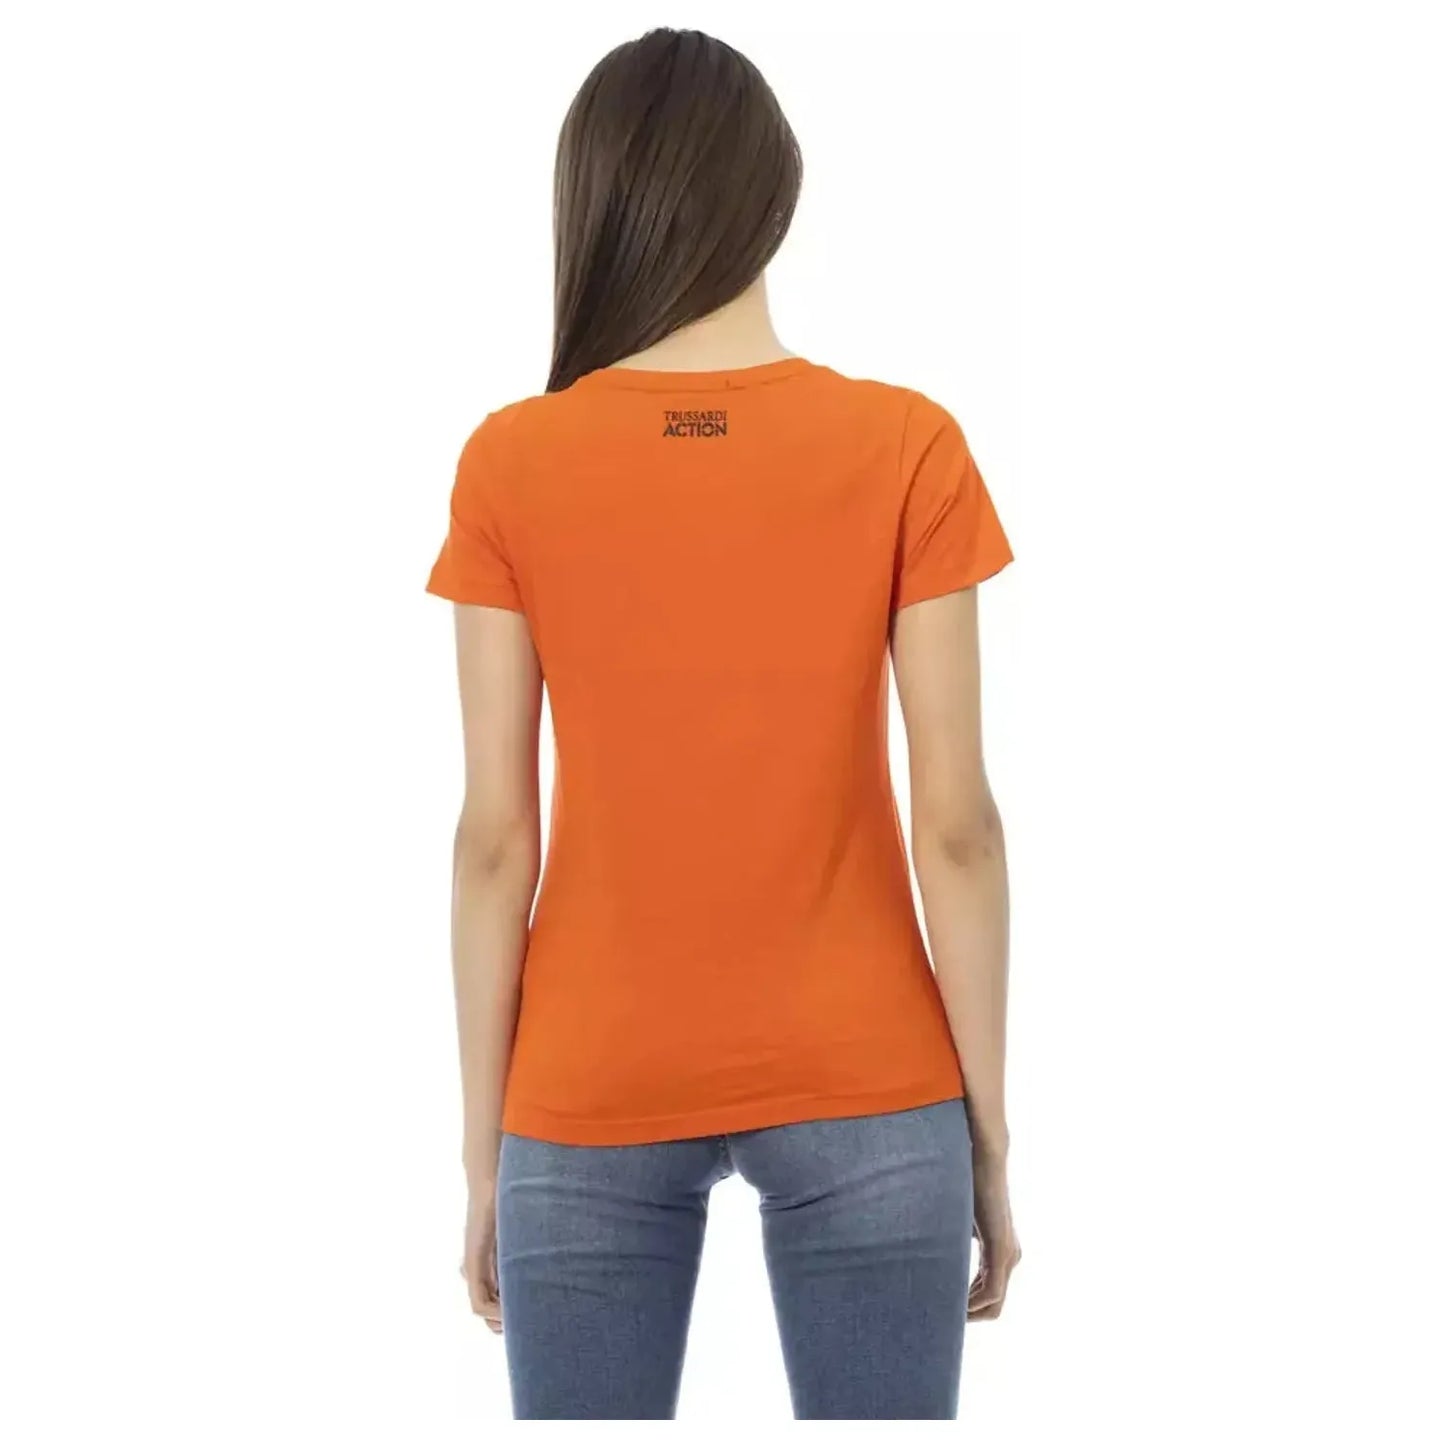 Trussardi Action Chic Orange Round Neck Tee with Front Print orange-cotton-tops-t-shirt-2 product-23069-151508268-19-f7a30b2c-54b.webp